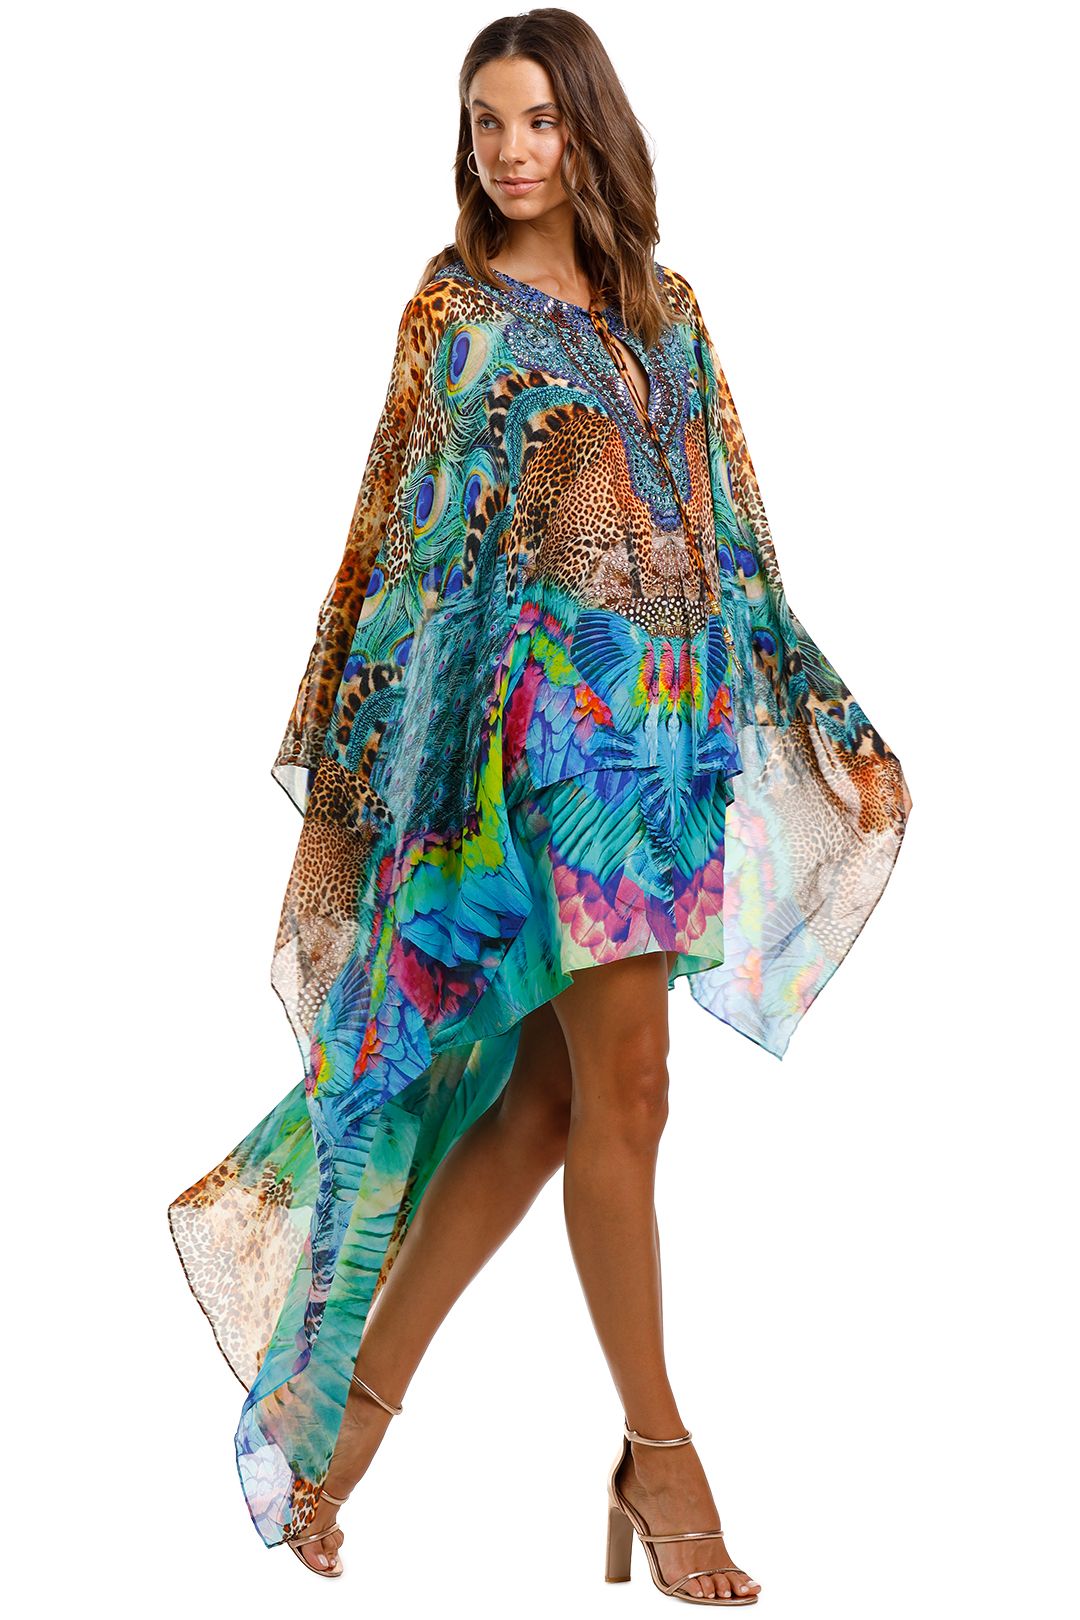 Camilla Long Sheer Overlay Dress Mother Xanadu Boho Dress